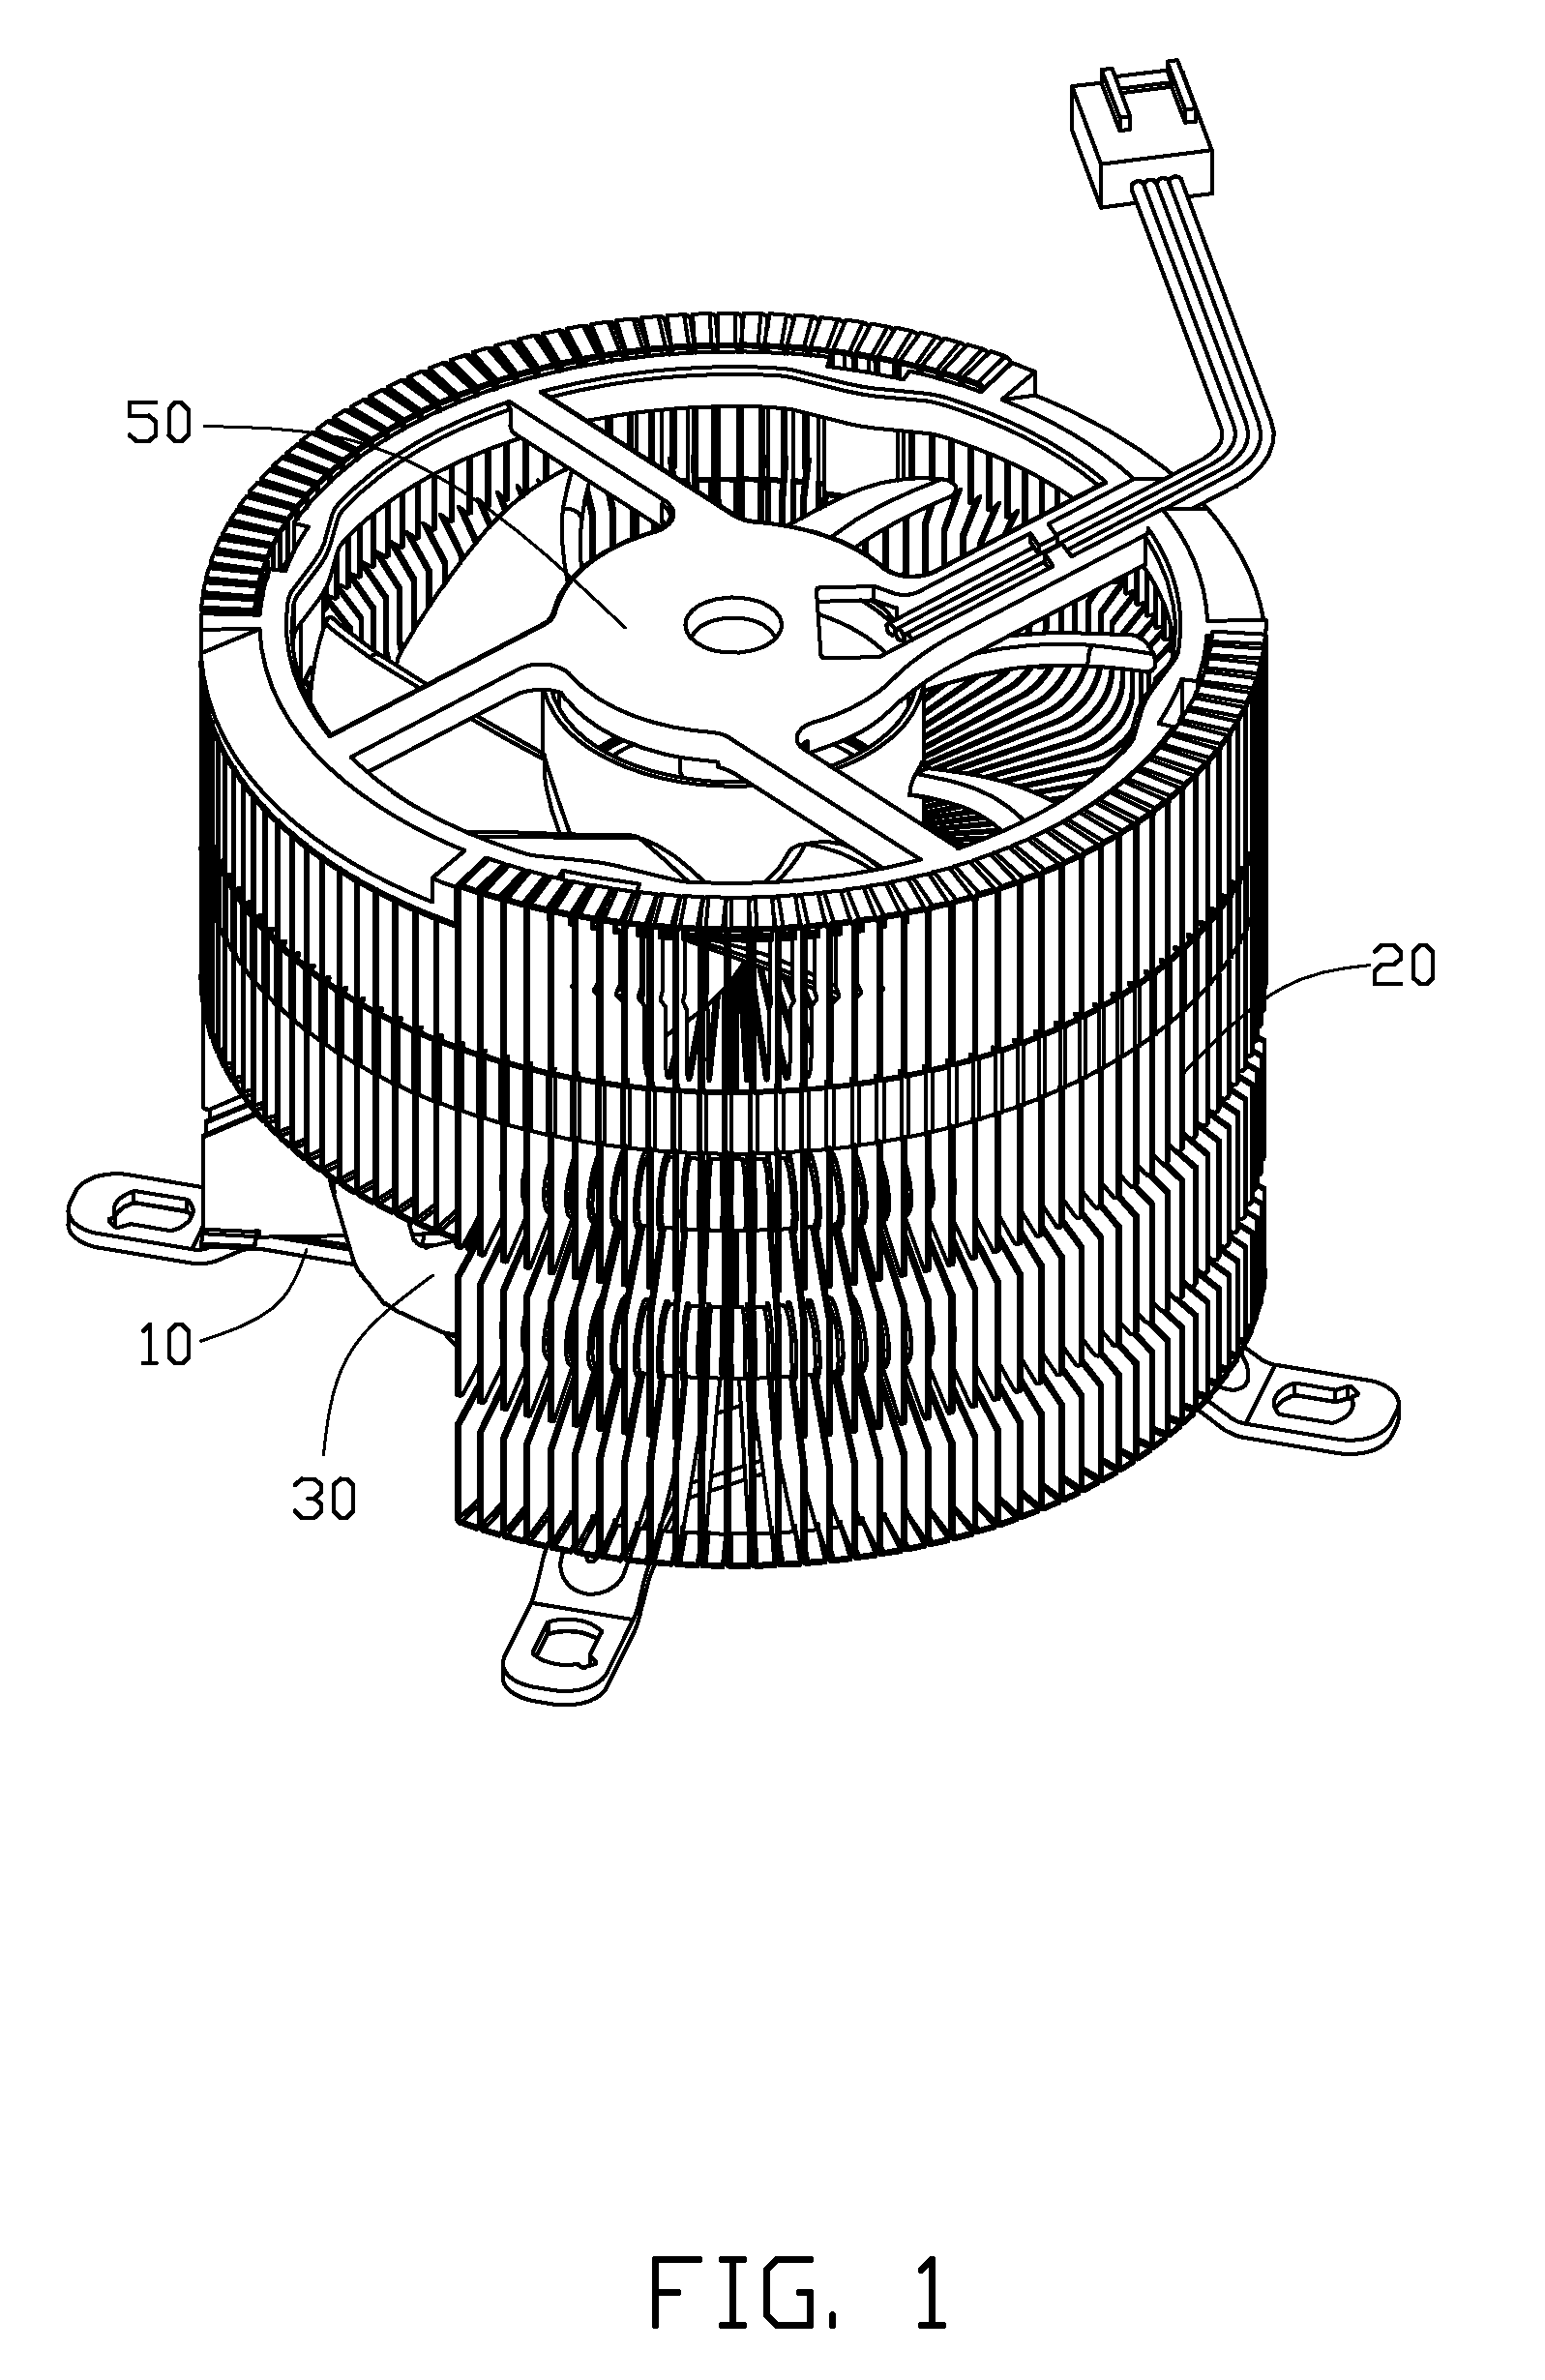 Heat dissipation apparatus incorporating a fan